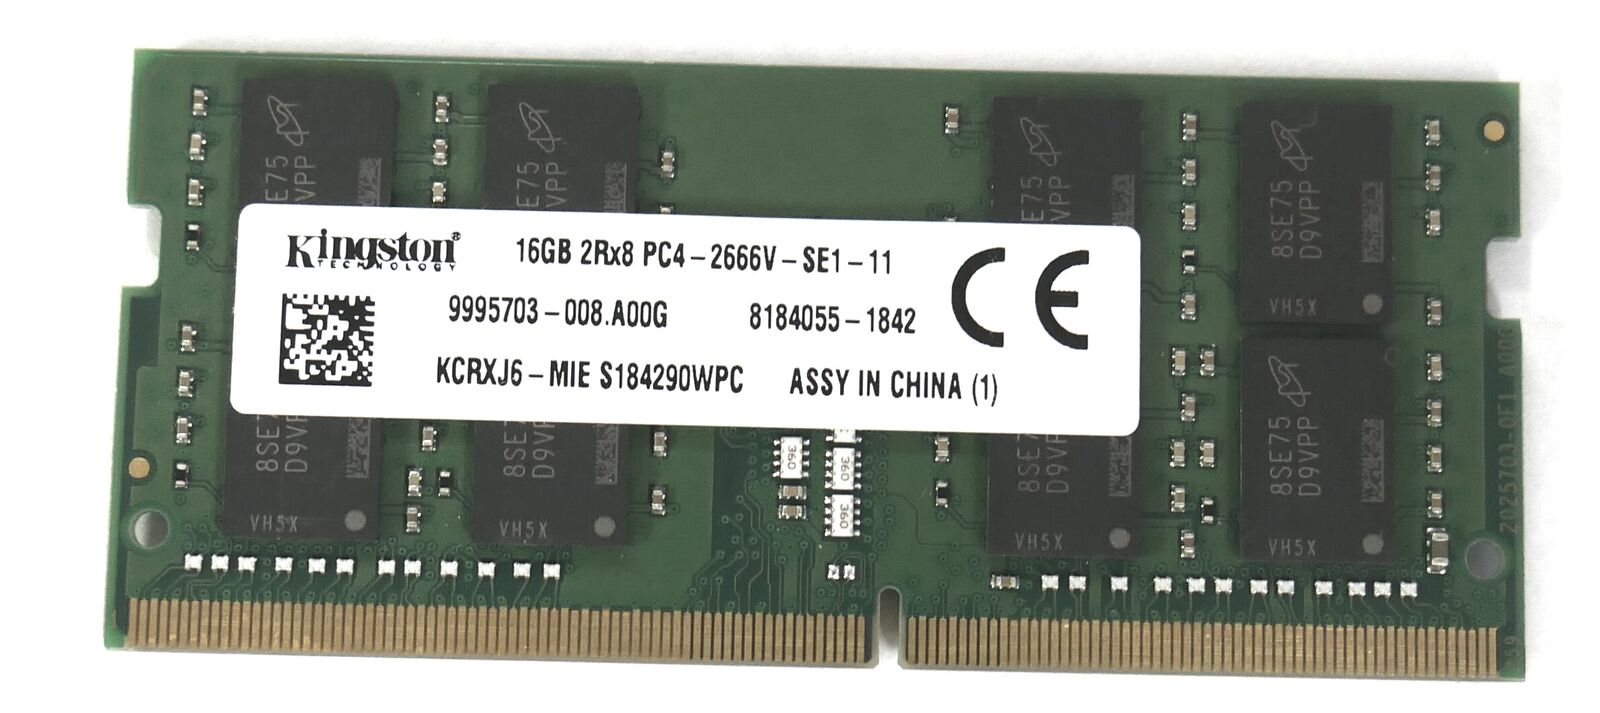 Laptop Memory: Kingston 16GB 2Rx8 PC4-2666V 21333MHz KCRXJ6-MIE